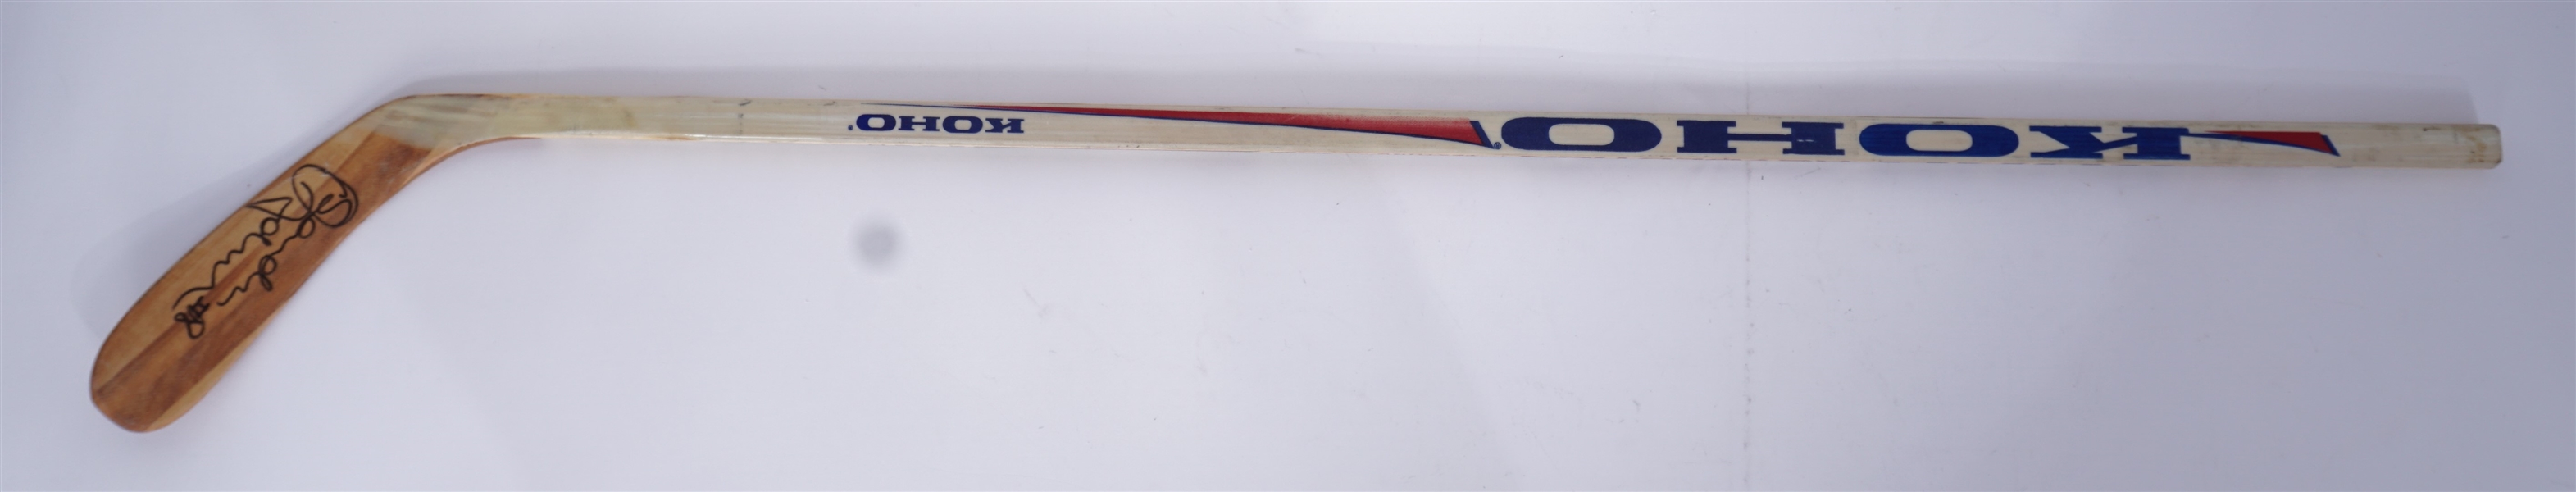 Sandis Ozolinsh Autographed Hockey Stick